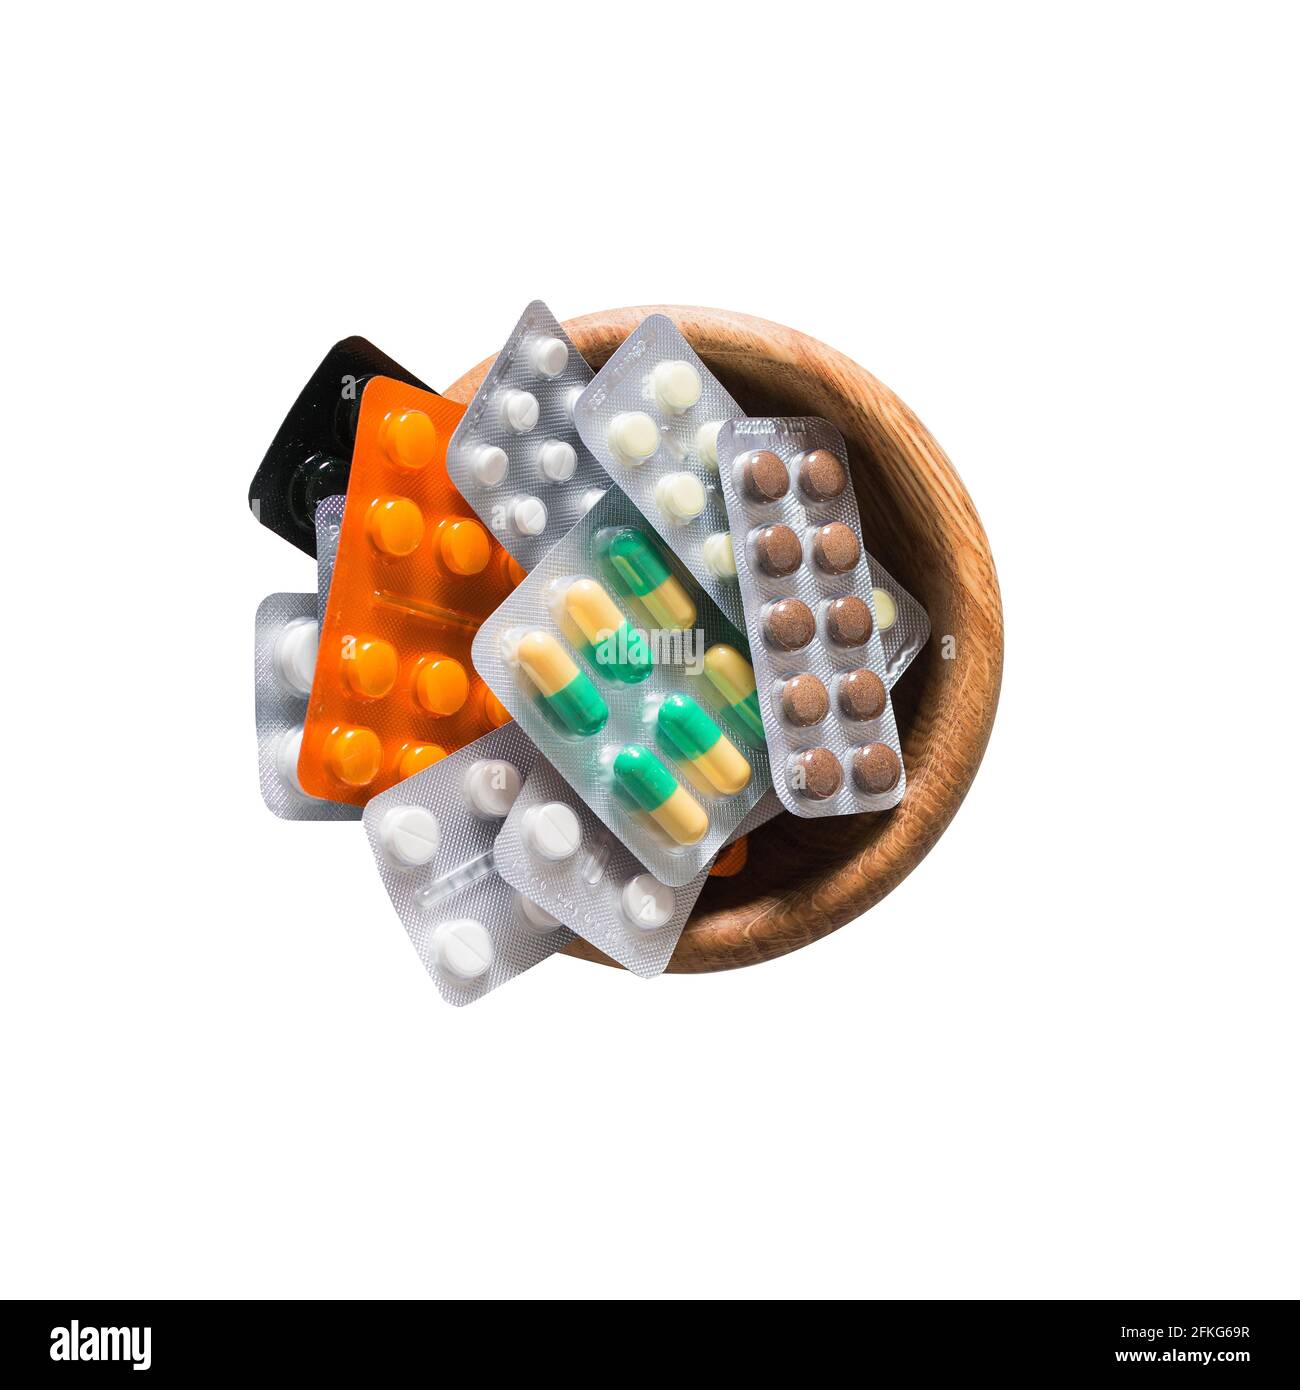 Verschiedene Medikamente: Tabletten, Blistertabletten, Medikamente, Pillen in Holzbecher. Makro-Flatlay-Ansicht. Stockfoto